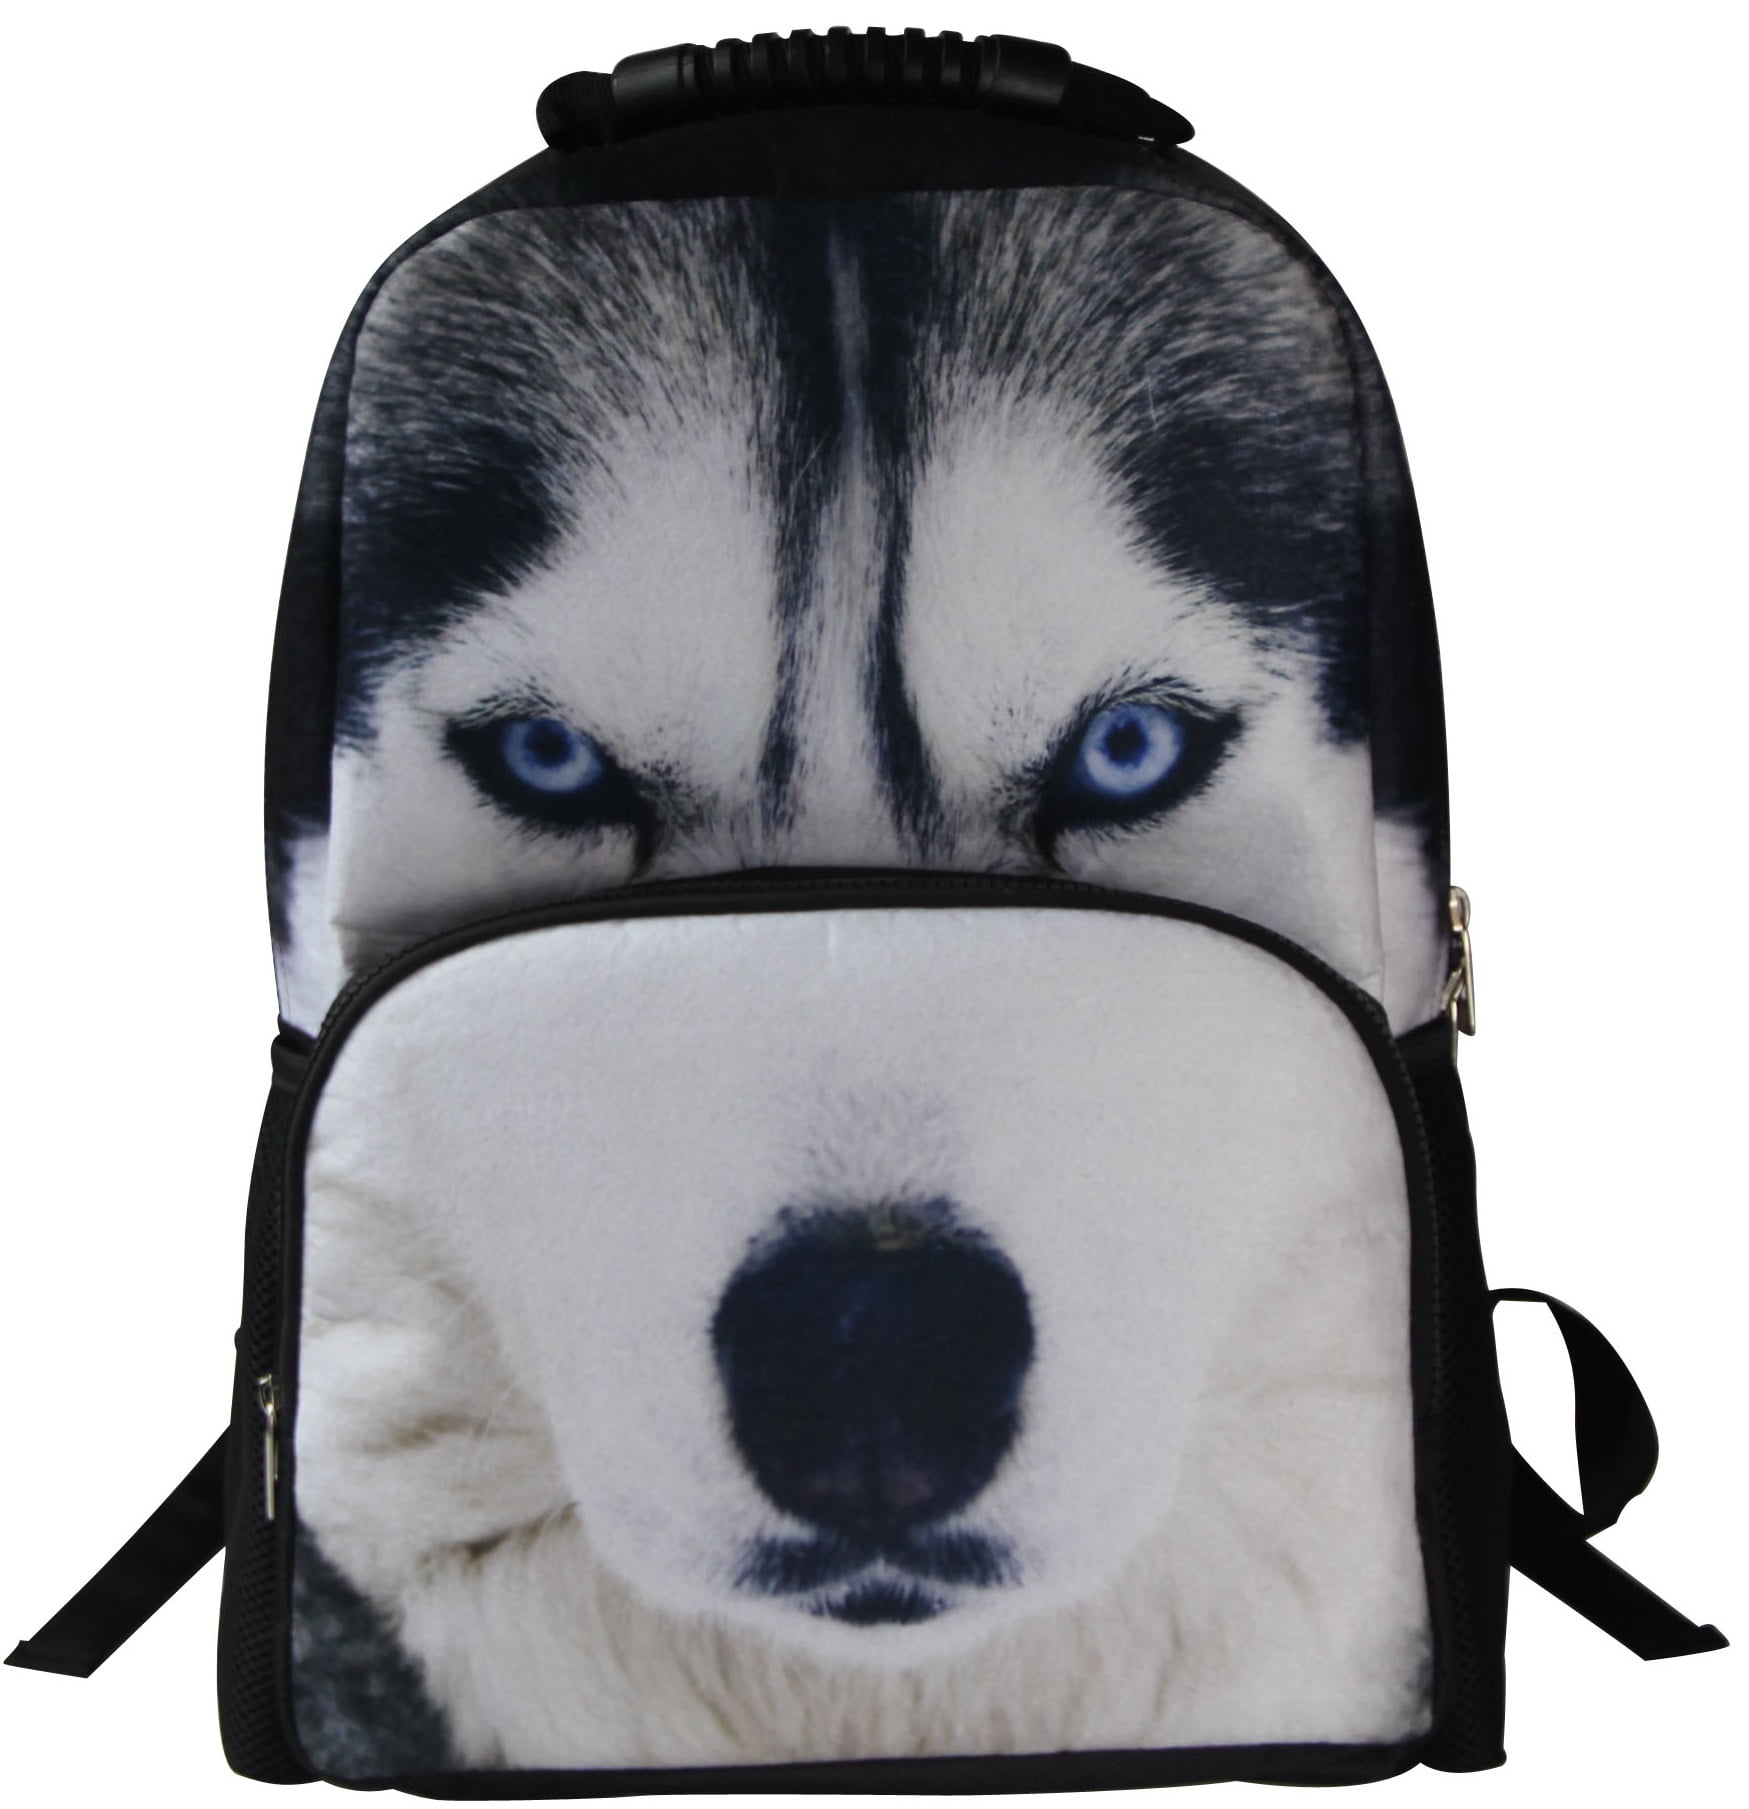 walmart dog backpack